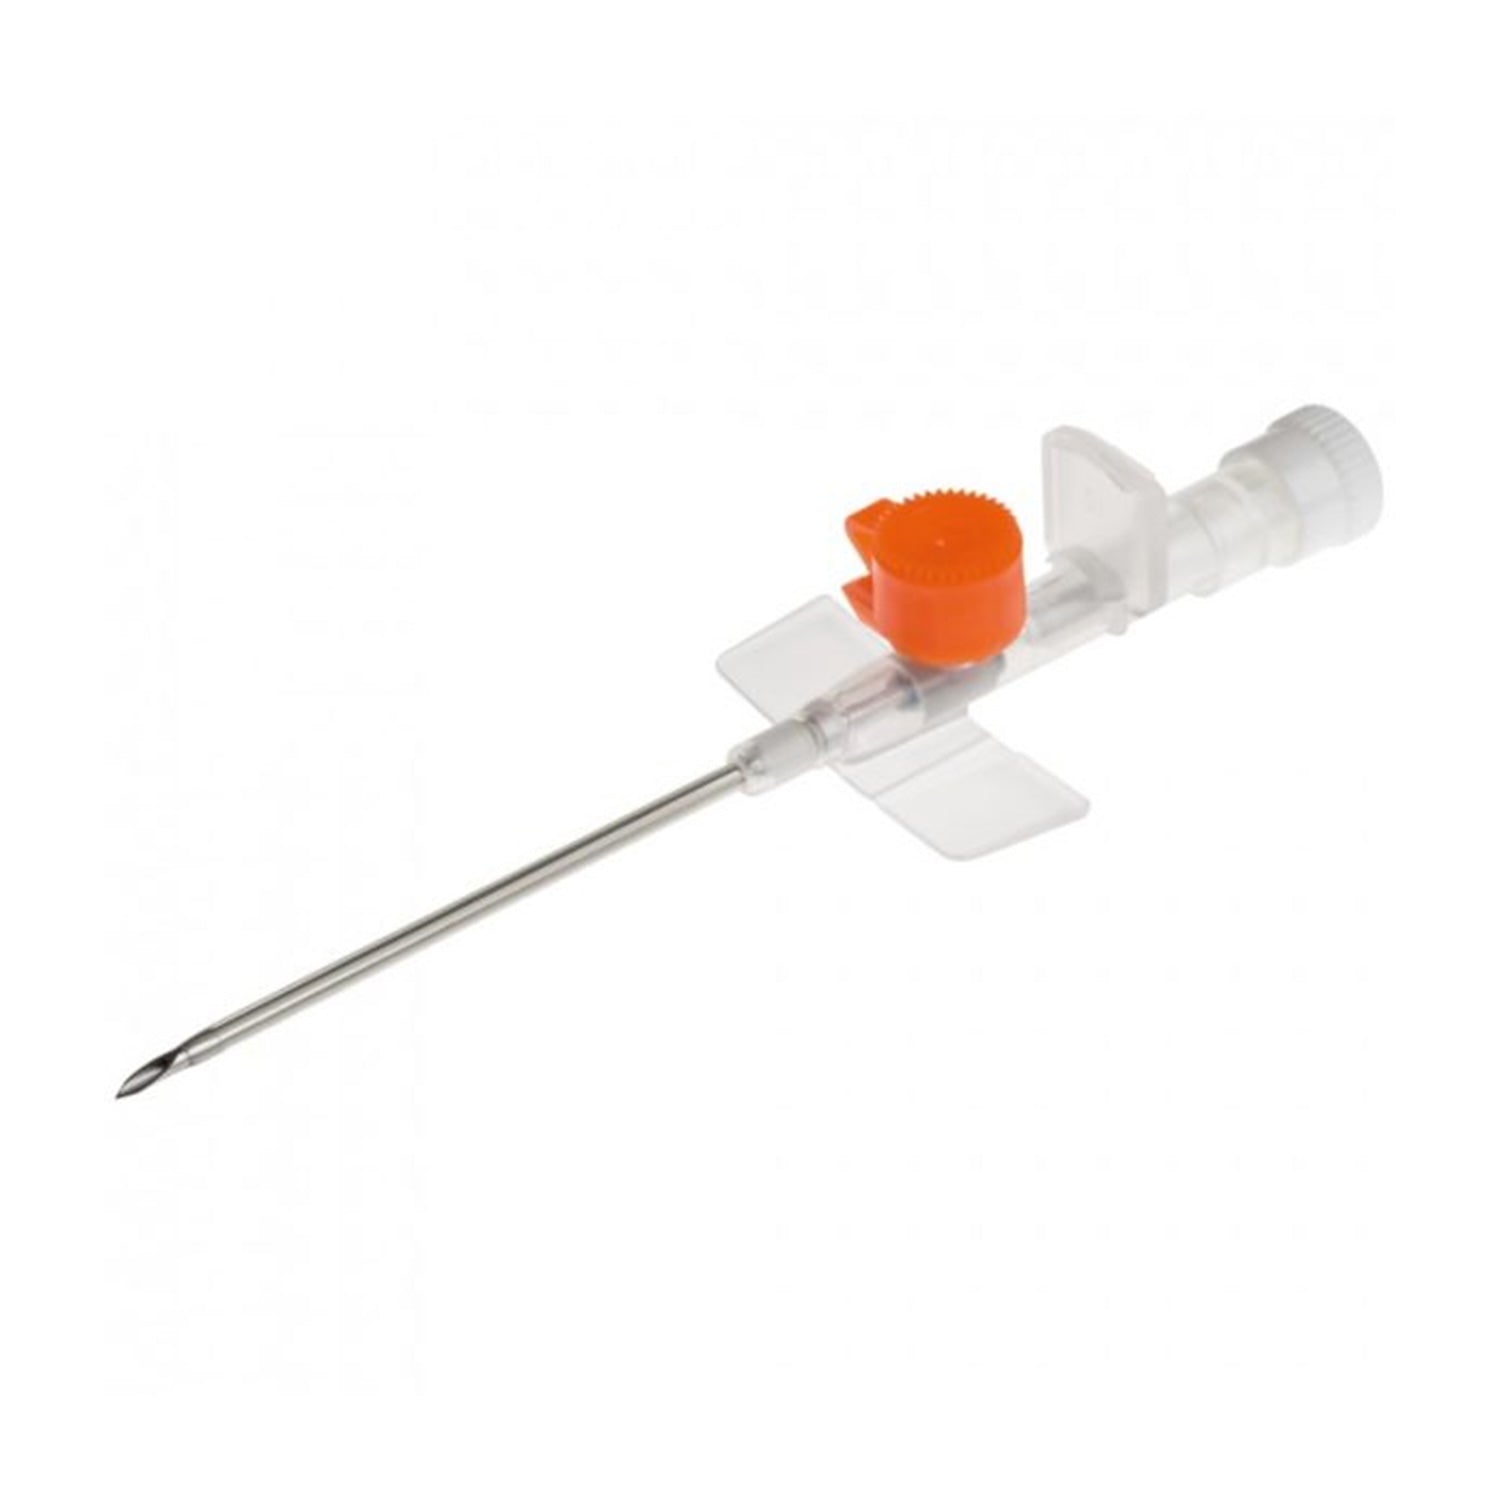 BD Venflon Pro Peripheral IV Cannula with Injection Port | Orange x 14G x 45mm | Single